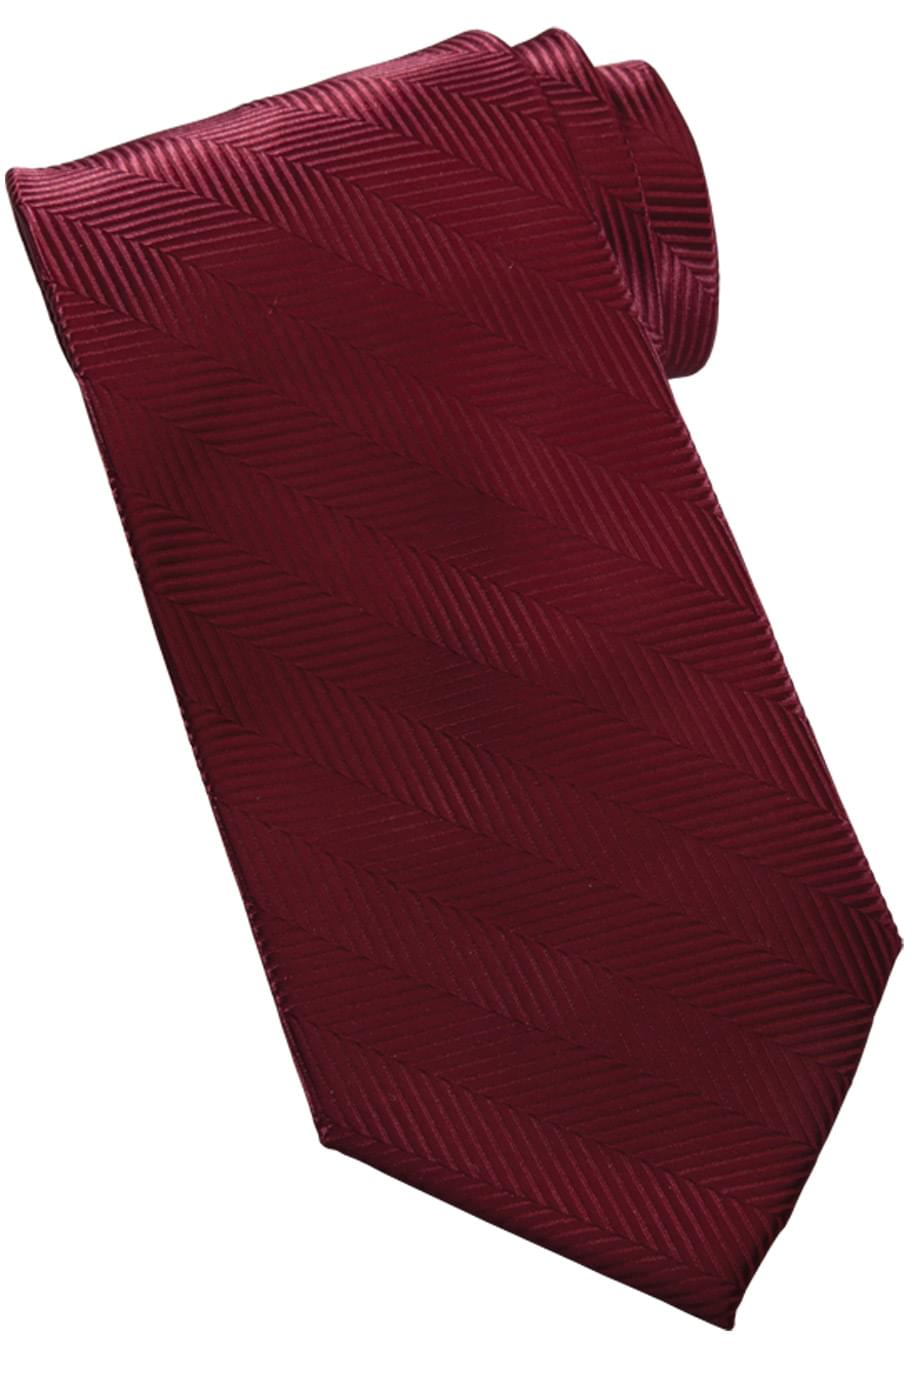 Uniforms - Solid Colour Color Tie, Herringbone Wine, Burgundy